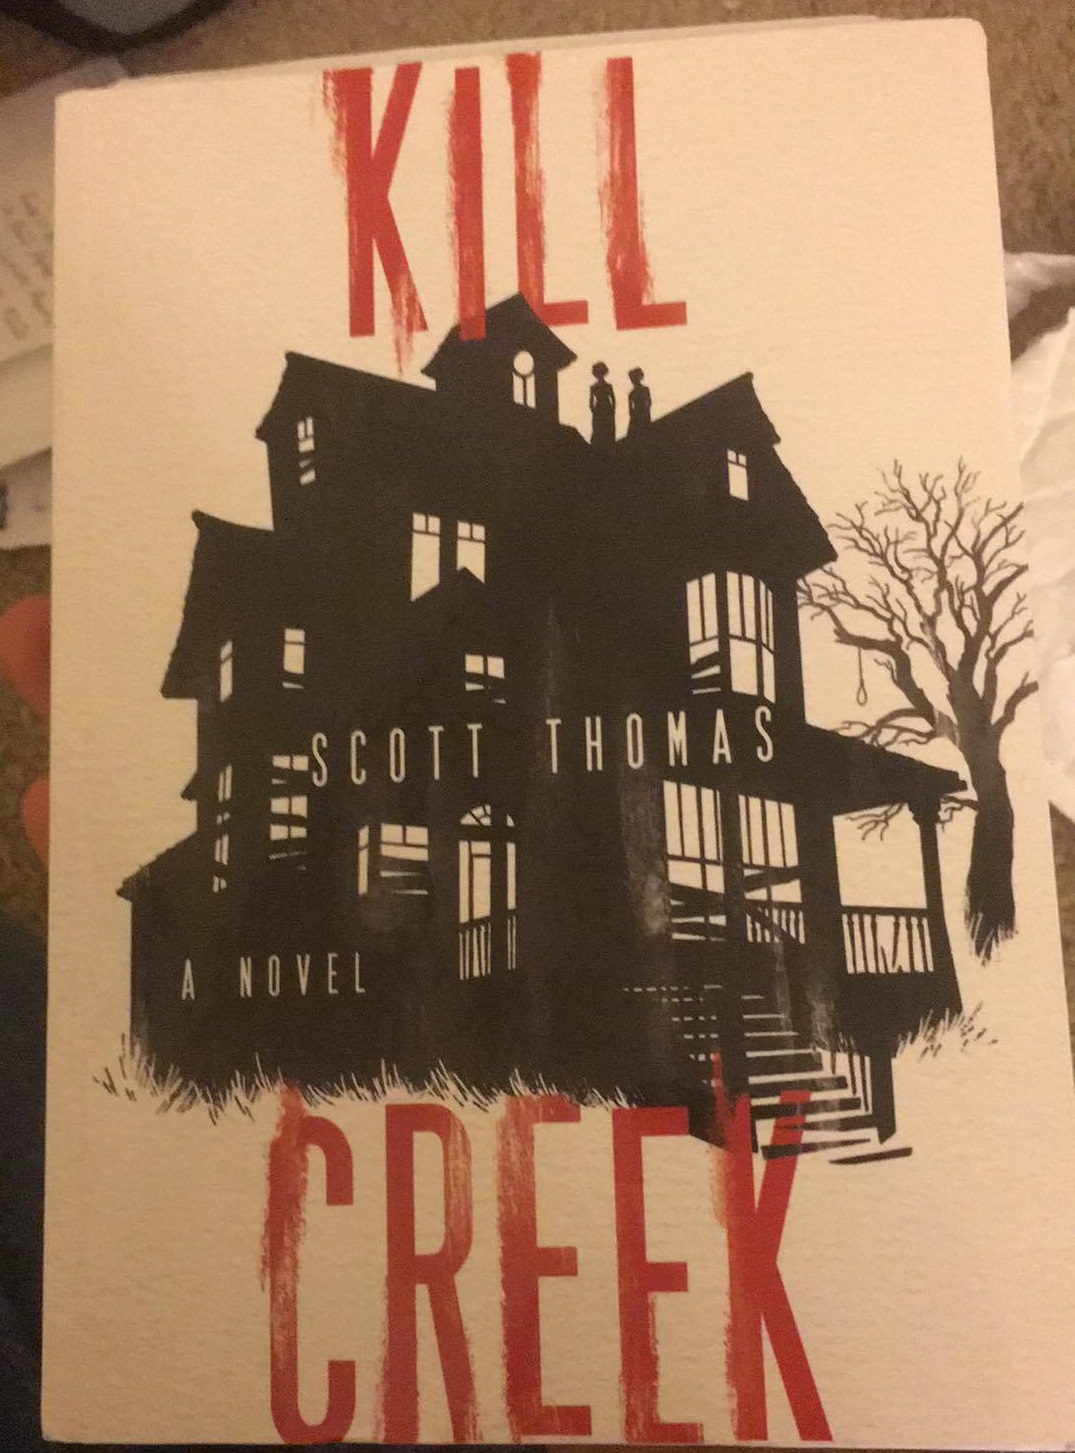 Kill Creek Scott Thomas book review Inshares